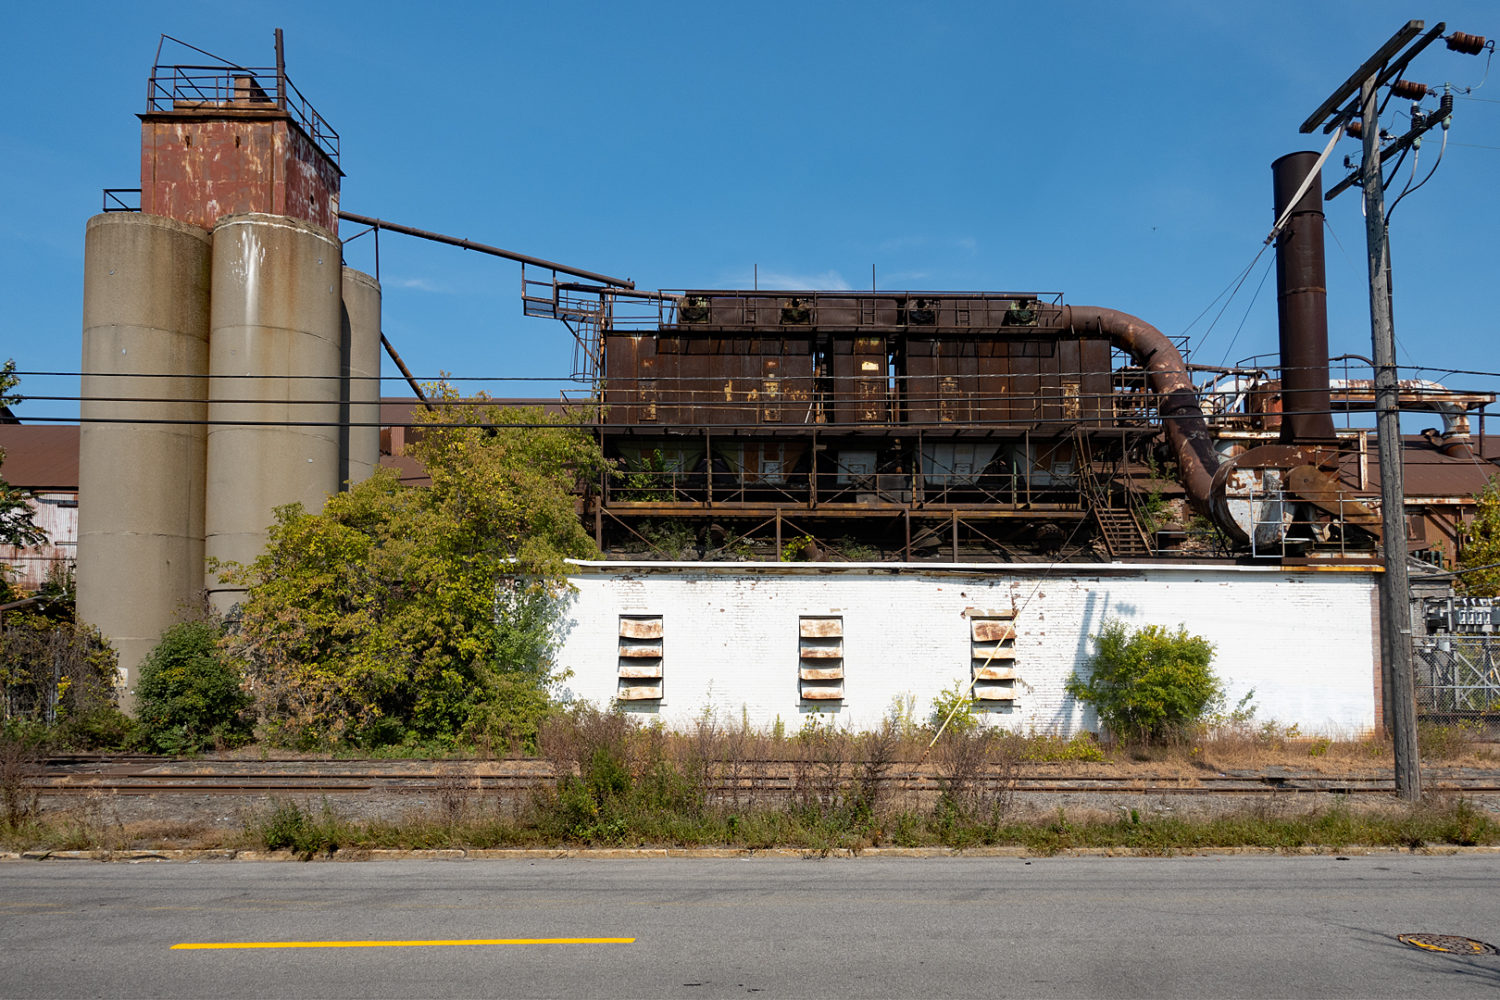 Old industry ruins in Niagara Falls